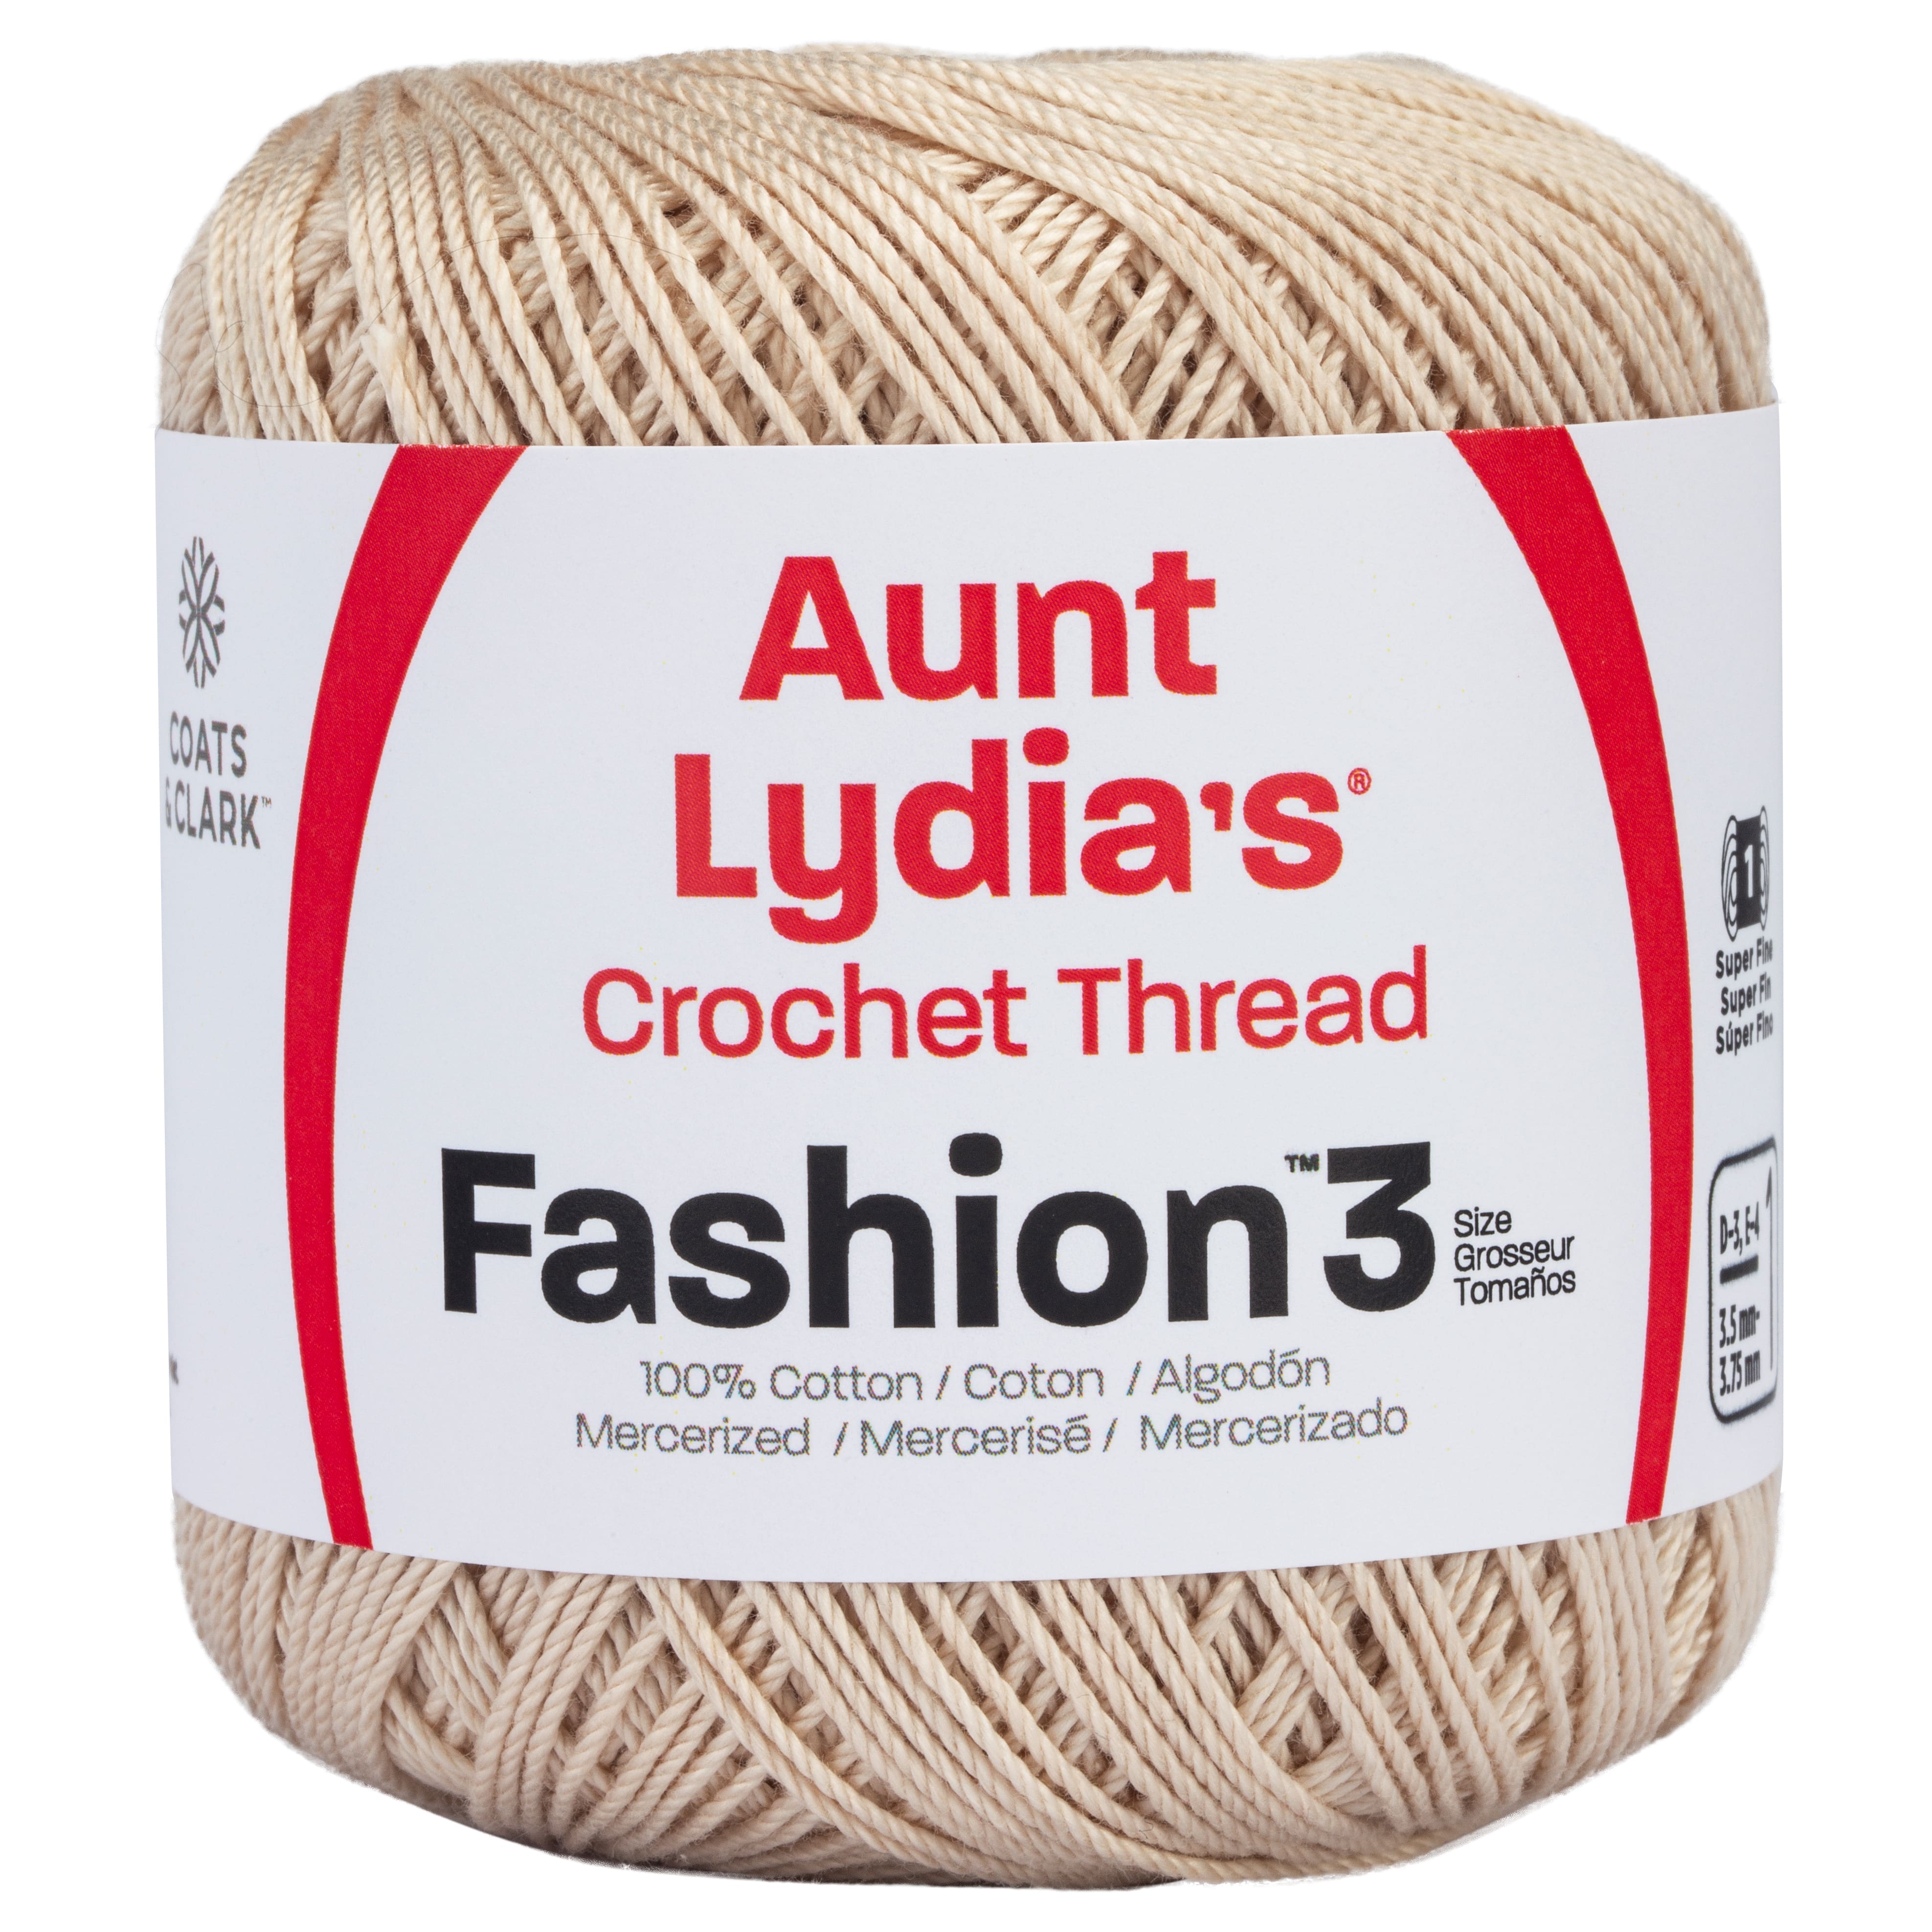 Tulip® Etimo Red Aluminum Crochet Hook with Cushion Grip